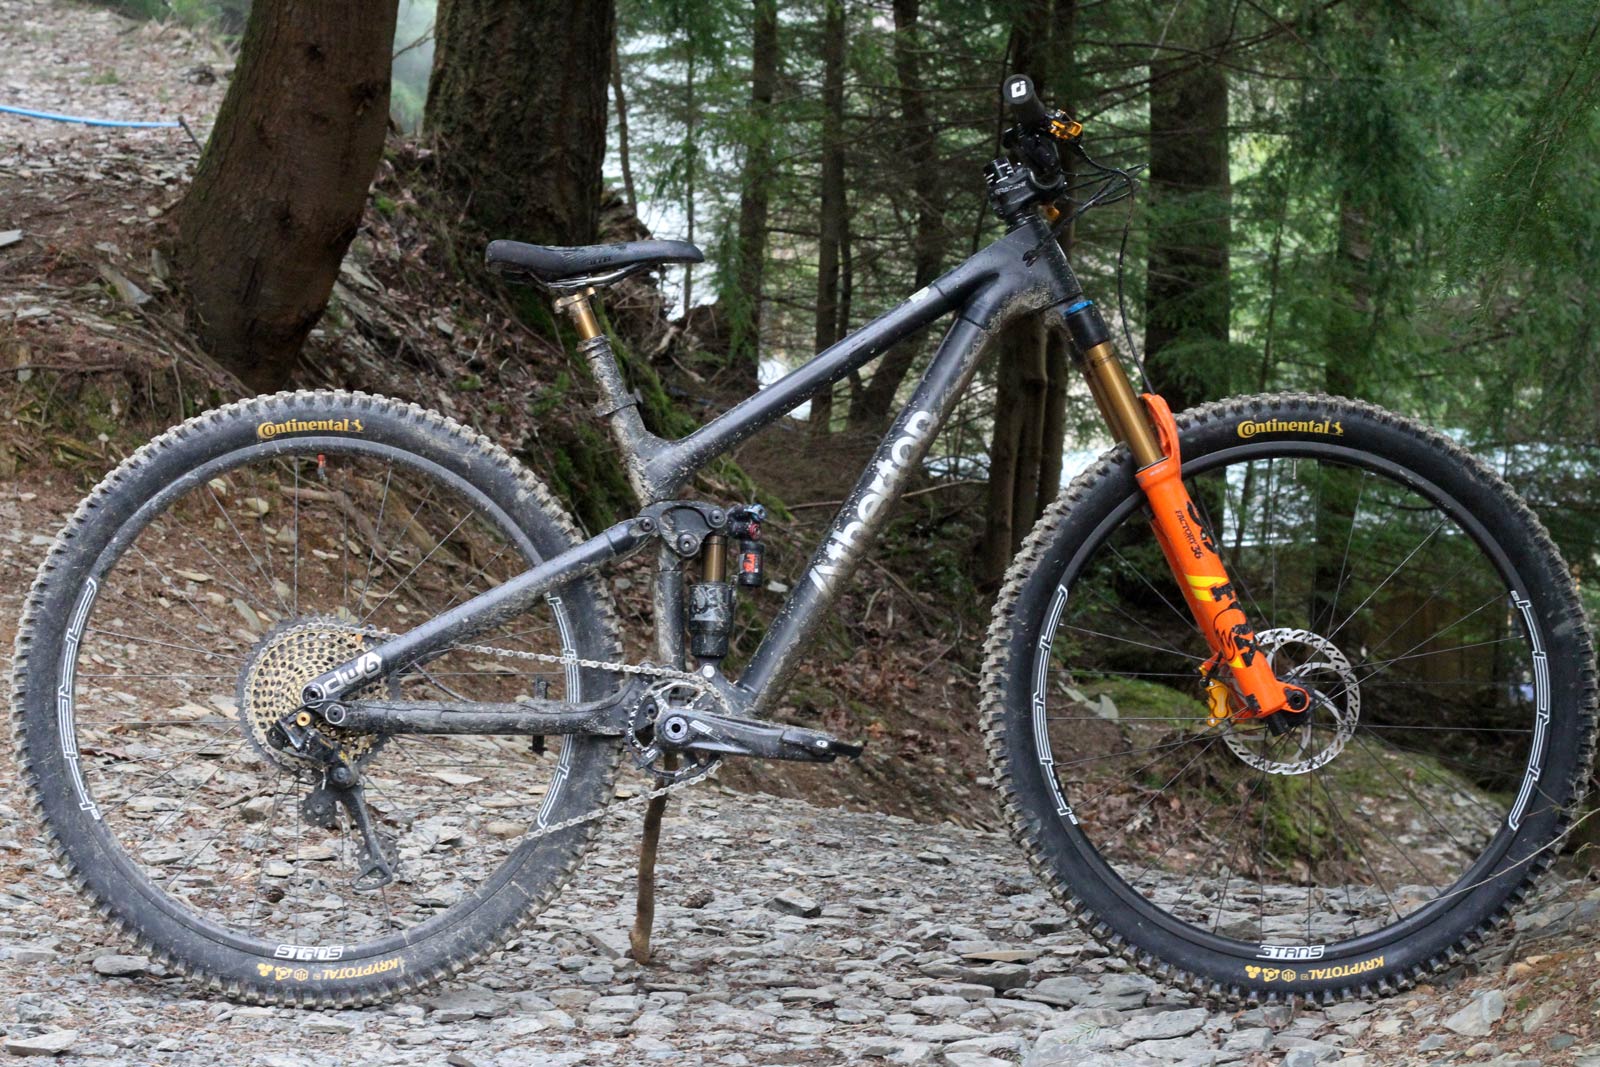 dan browns atherton trail bike with continental kryptotal dh casing tires at dyfi bike park